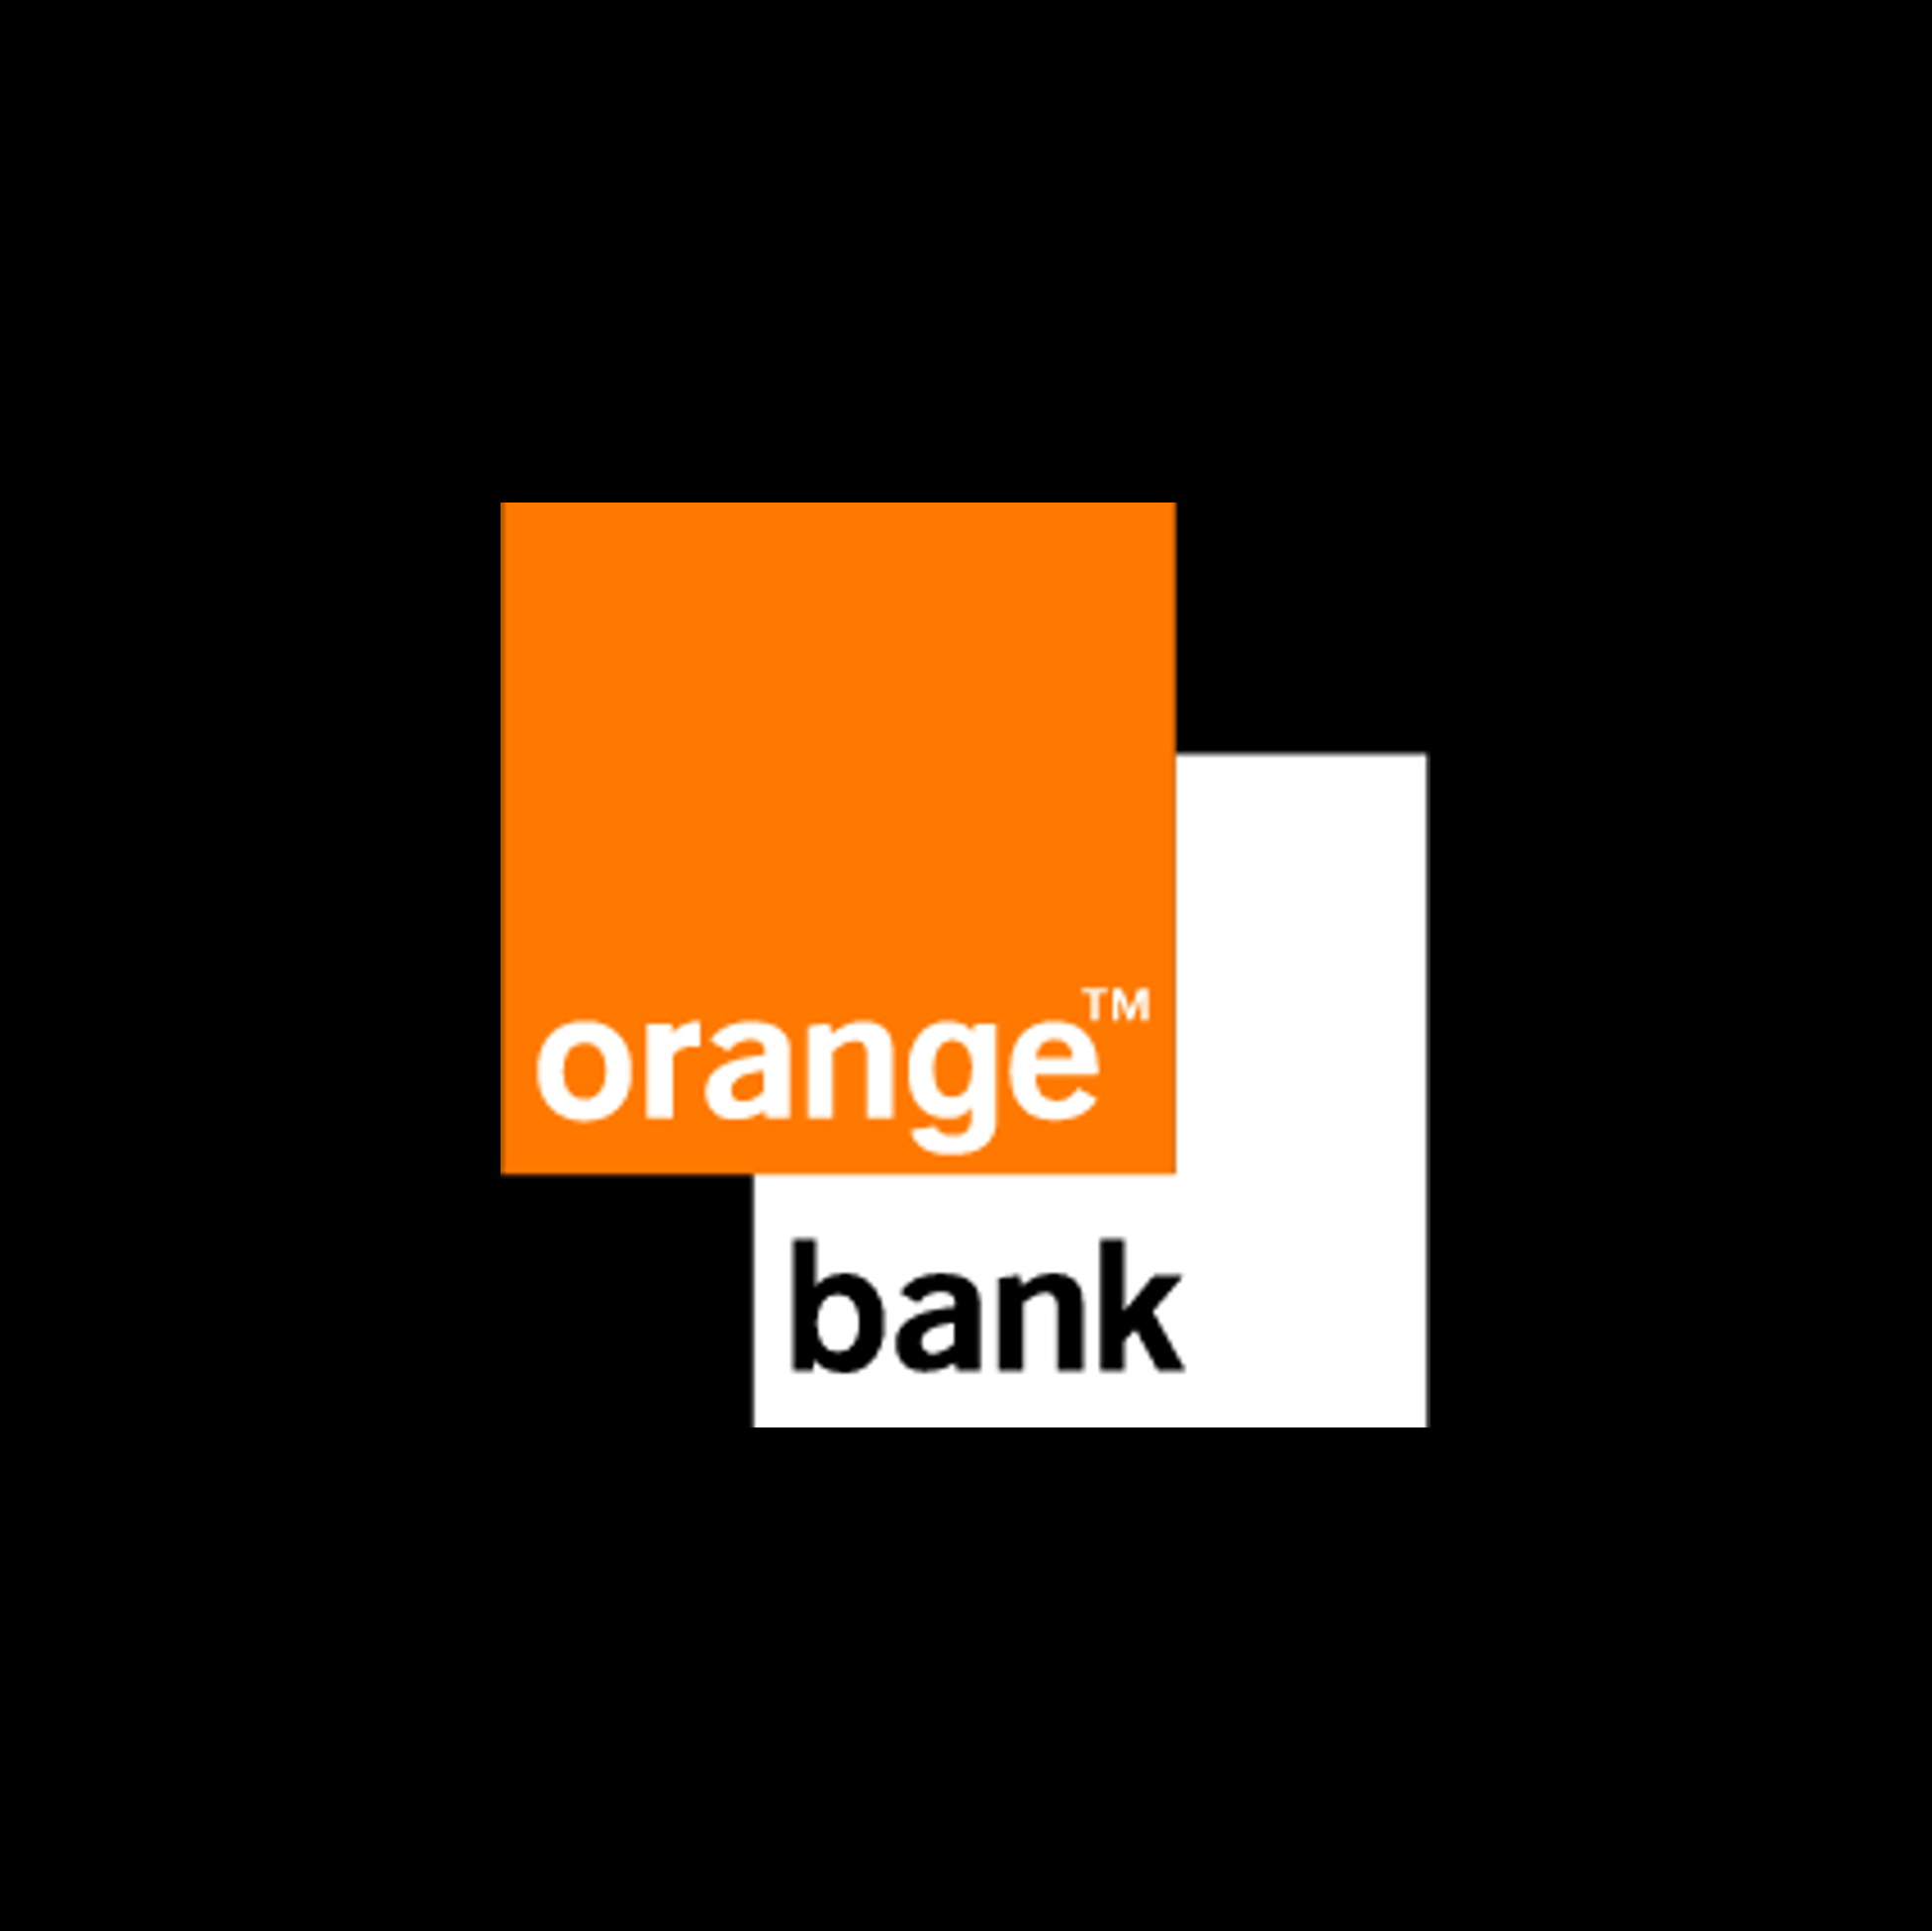 Logo Orange Bank sur fond noir.  